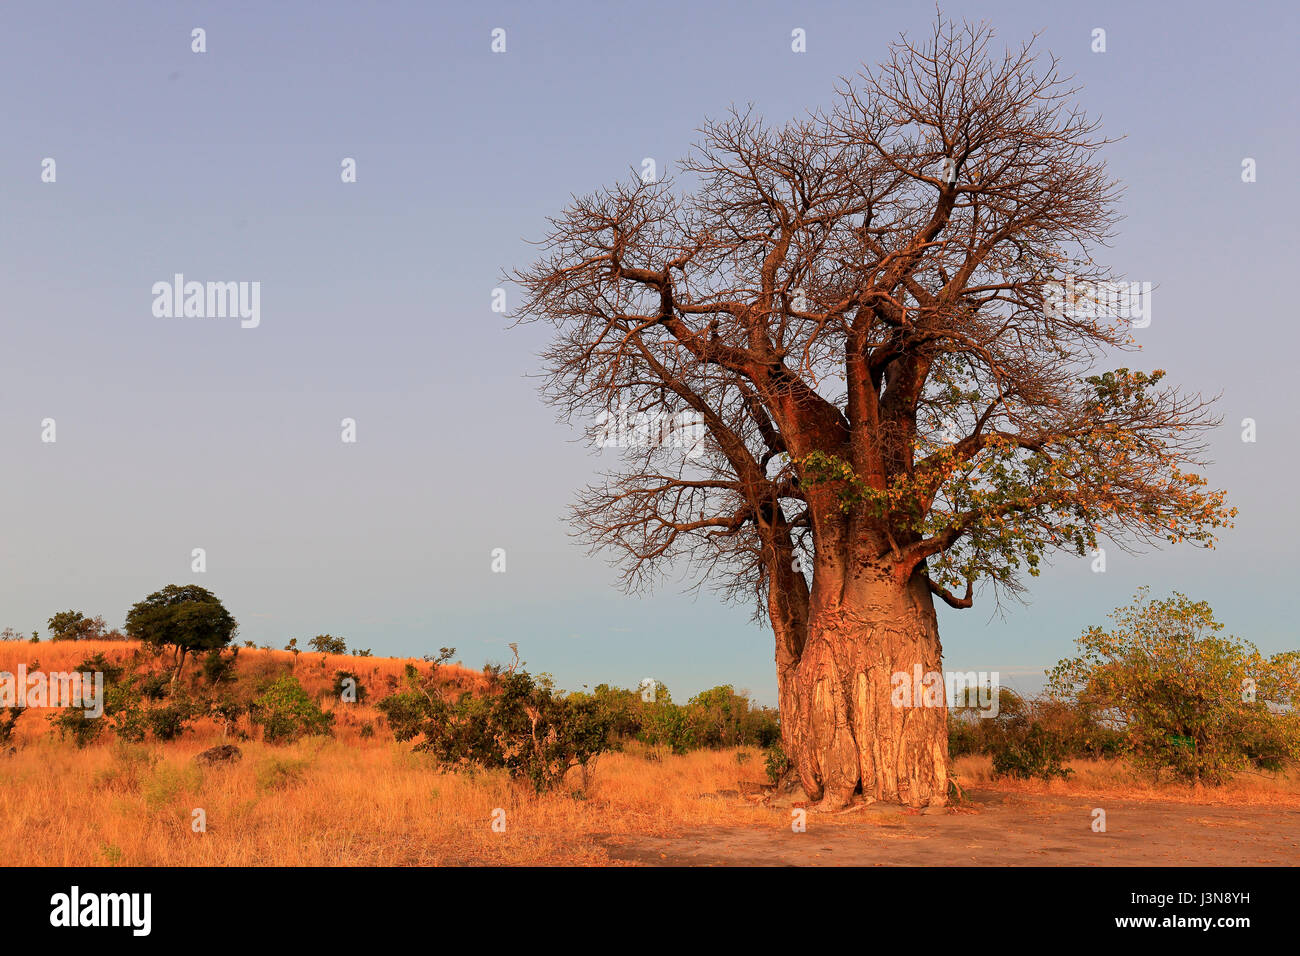 Affenbrotbaum, Adansonia digitata, Savuti, Chobe National Park, Botswana, Africa Foto Stock